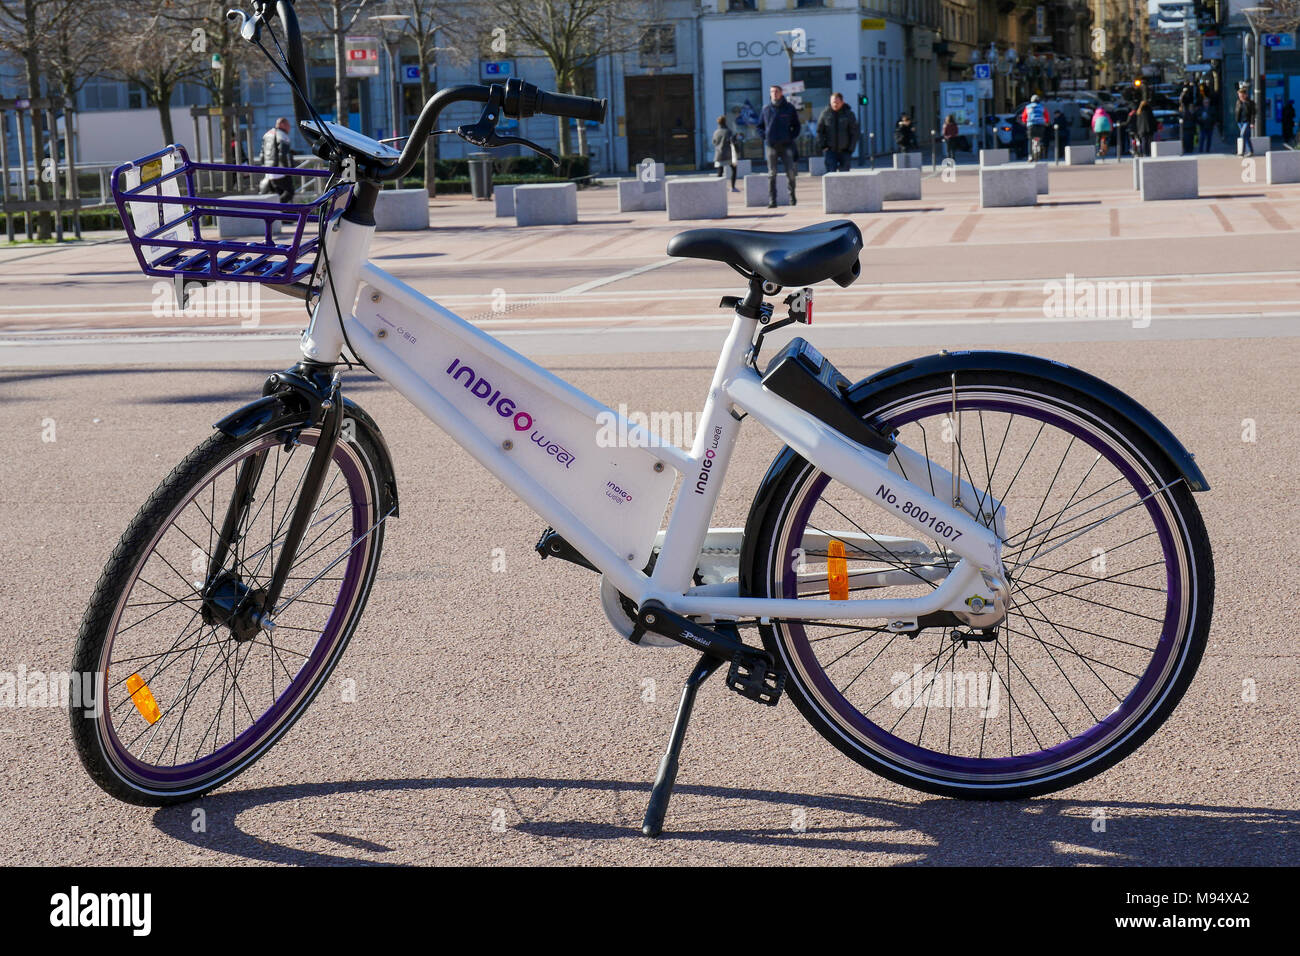 Indigo weel bike hi-res stock photography and images - Alamy